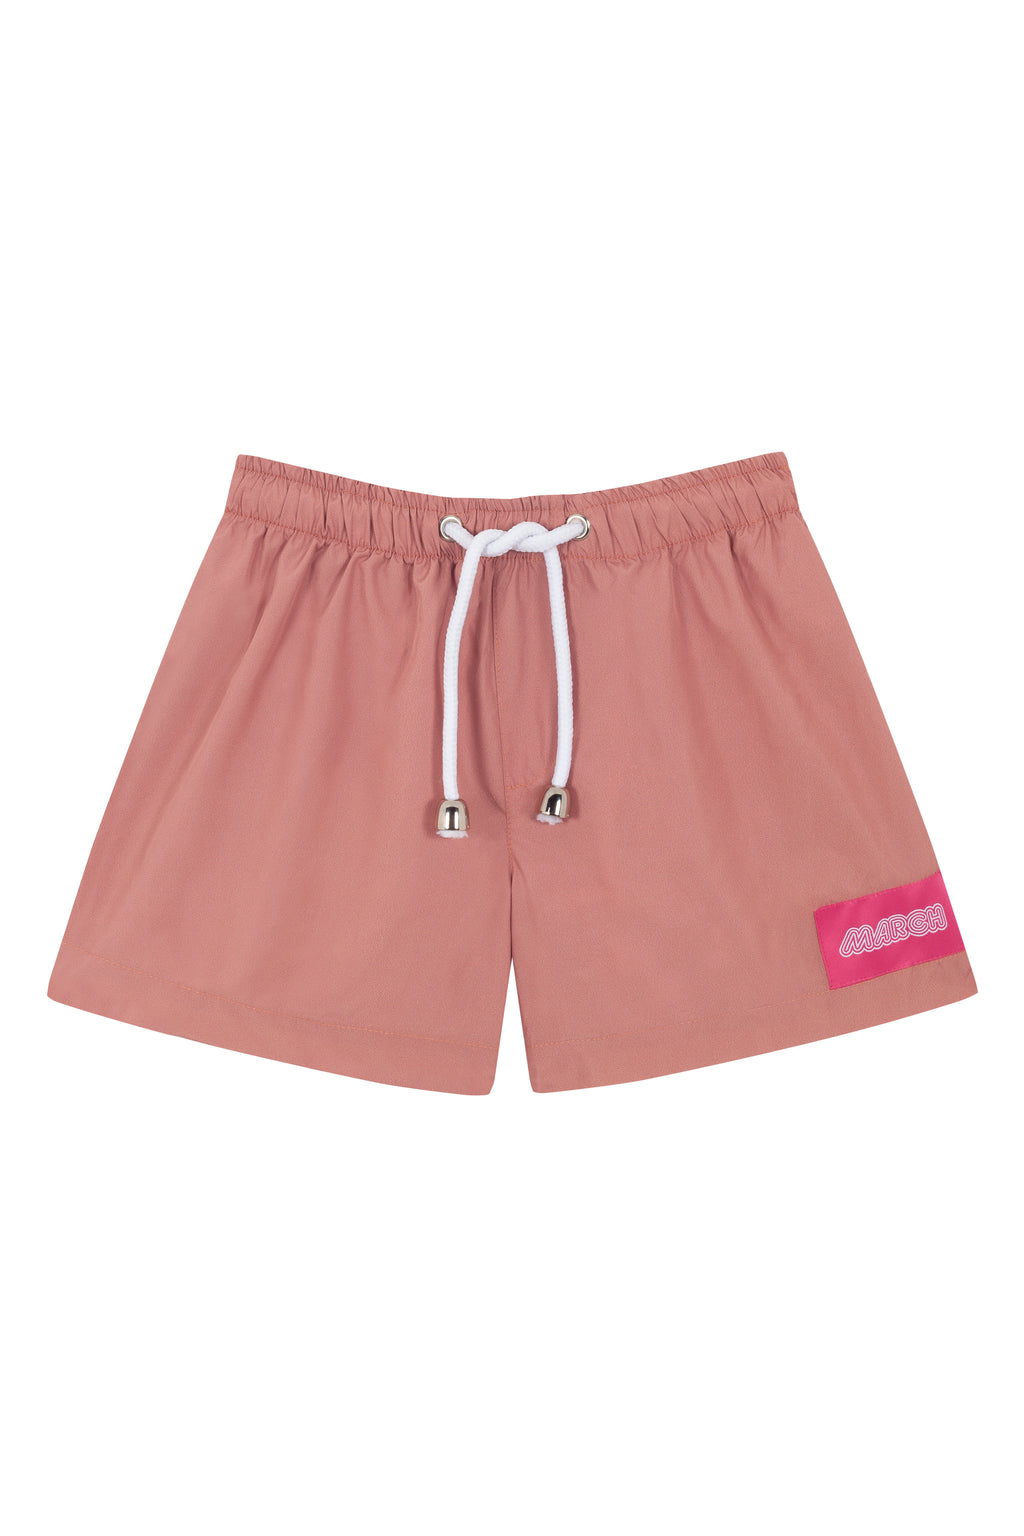 Kids Swim Shorts | Dusted Pink